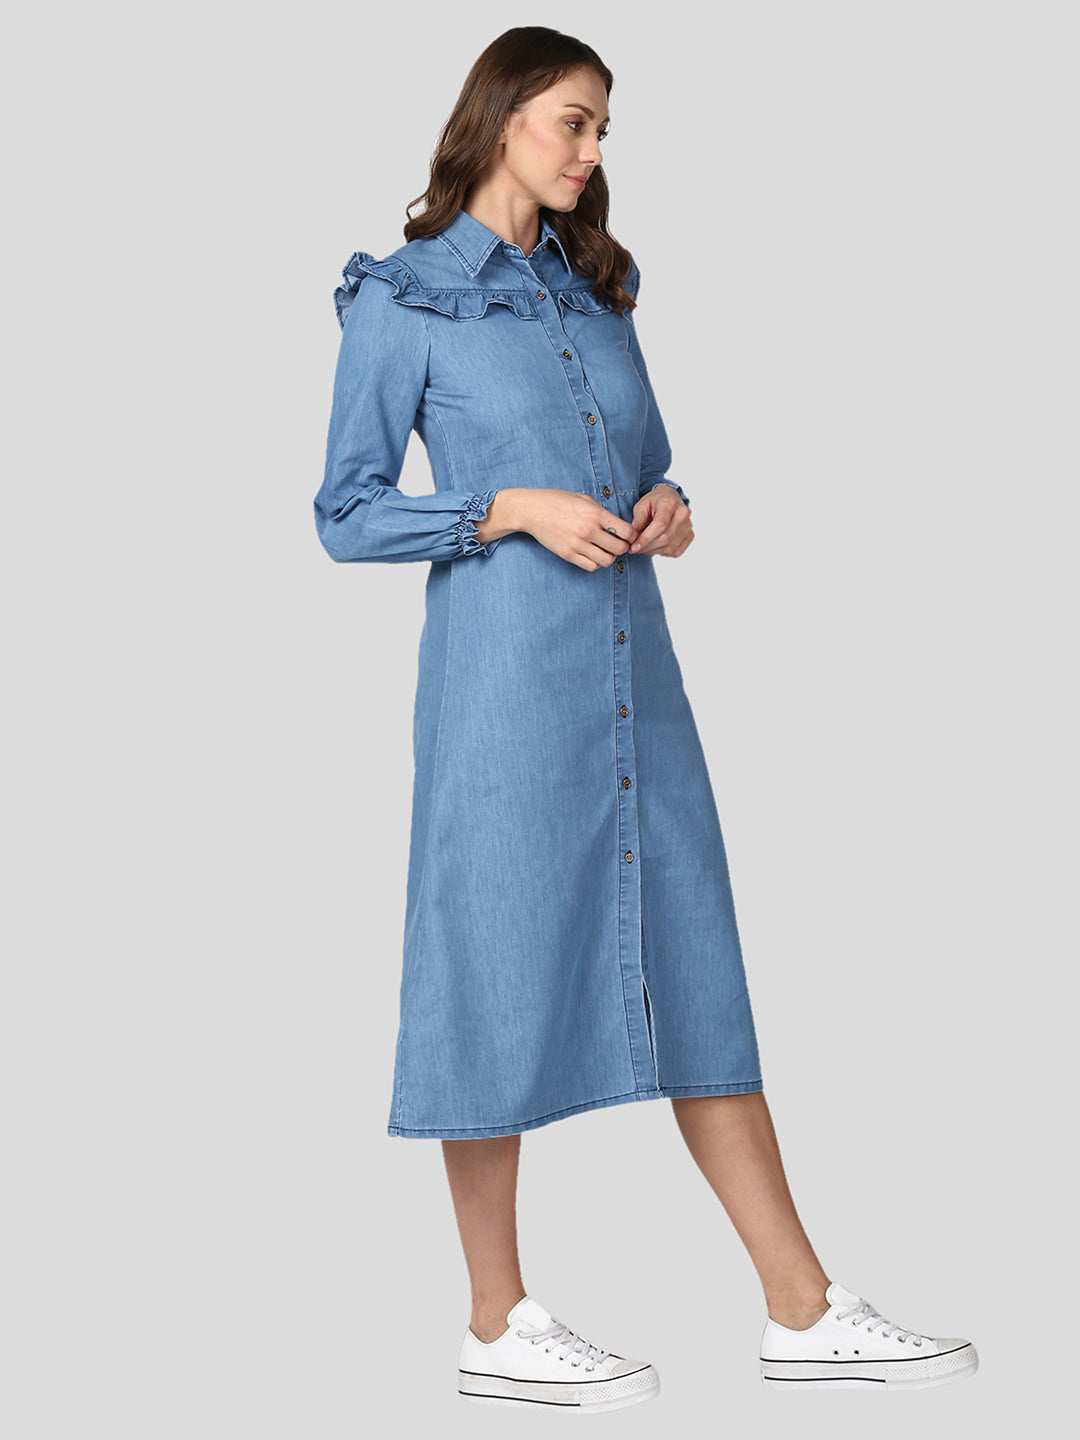 Women's Blue Denim Dress with Ruffle Detail